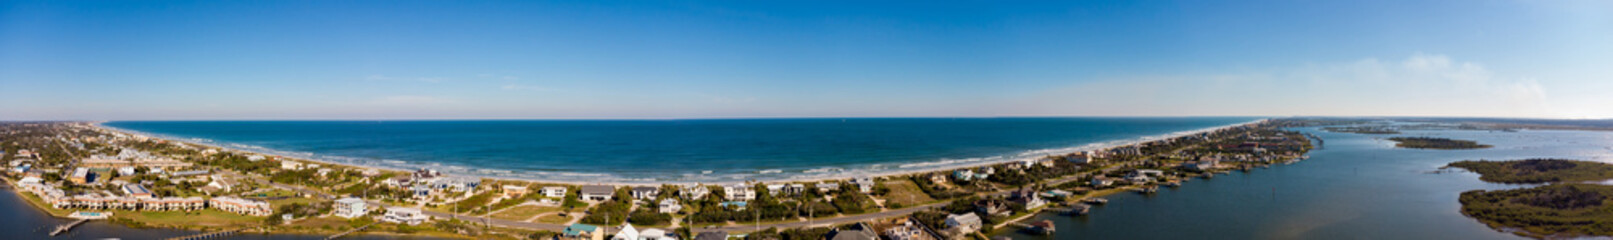 Crescent Beach, FL, USA aerial panorama